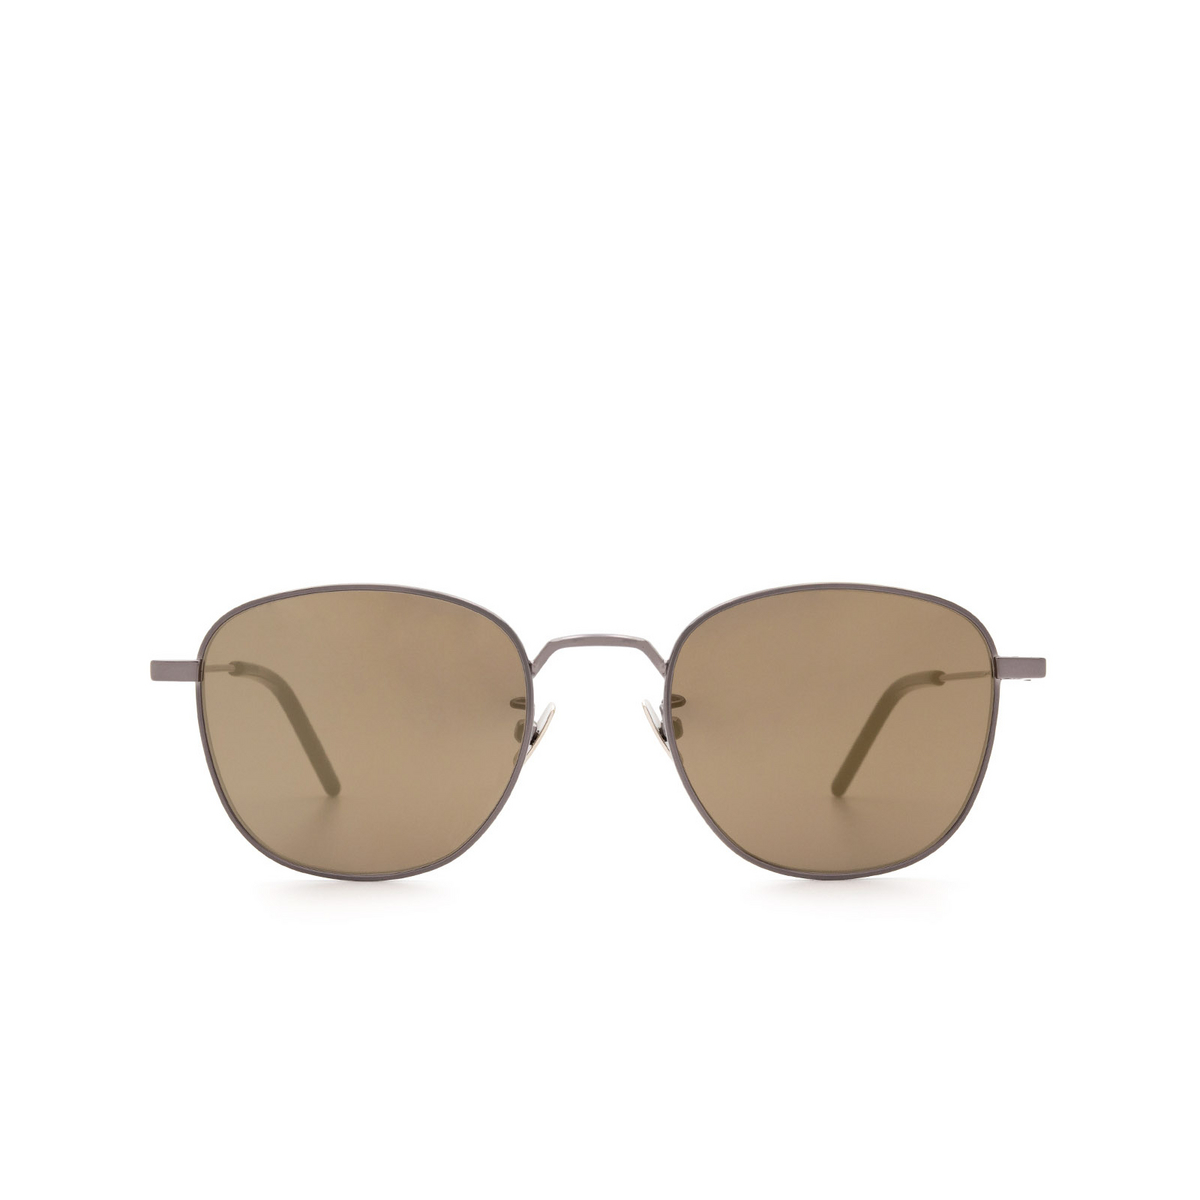 Saint Laurent® Square Sunglasses: SL 299 color Ruthenium 007 - 1/3.